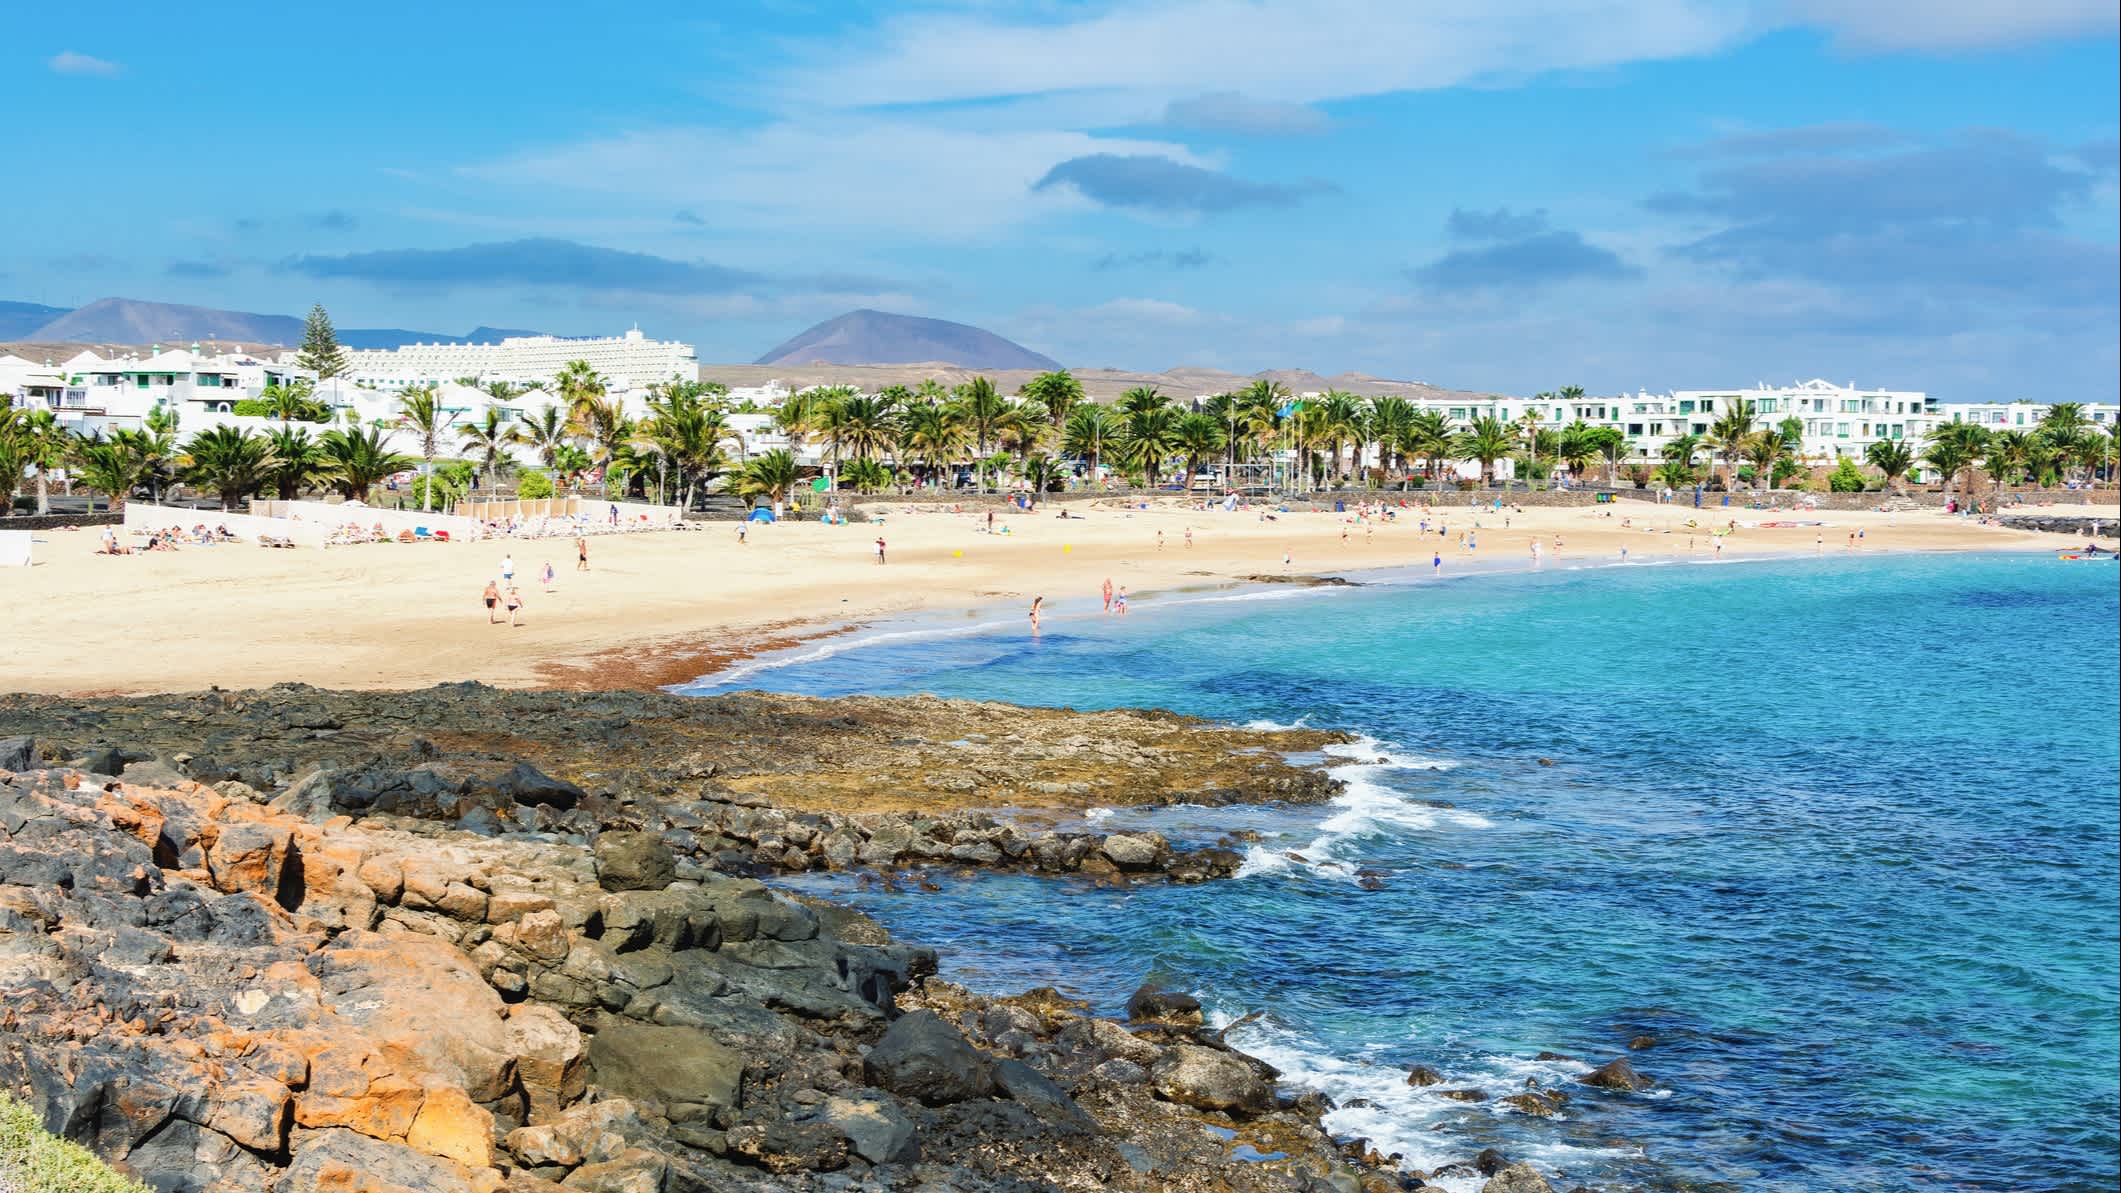 Blick zum Strand Las Cucharas in Costa Teguise, Lanzarote, Spanien

